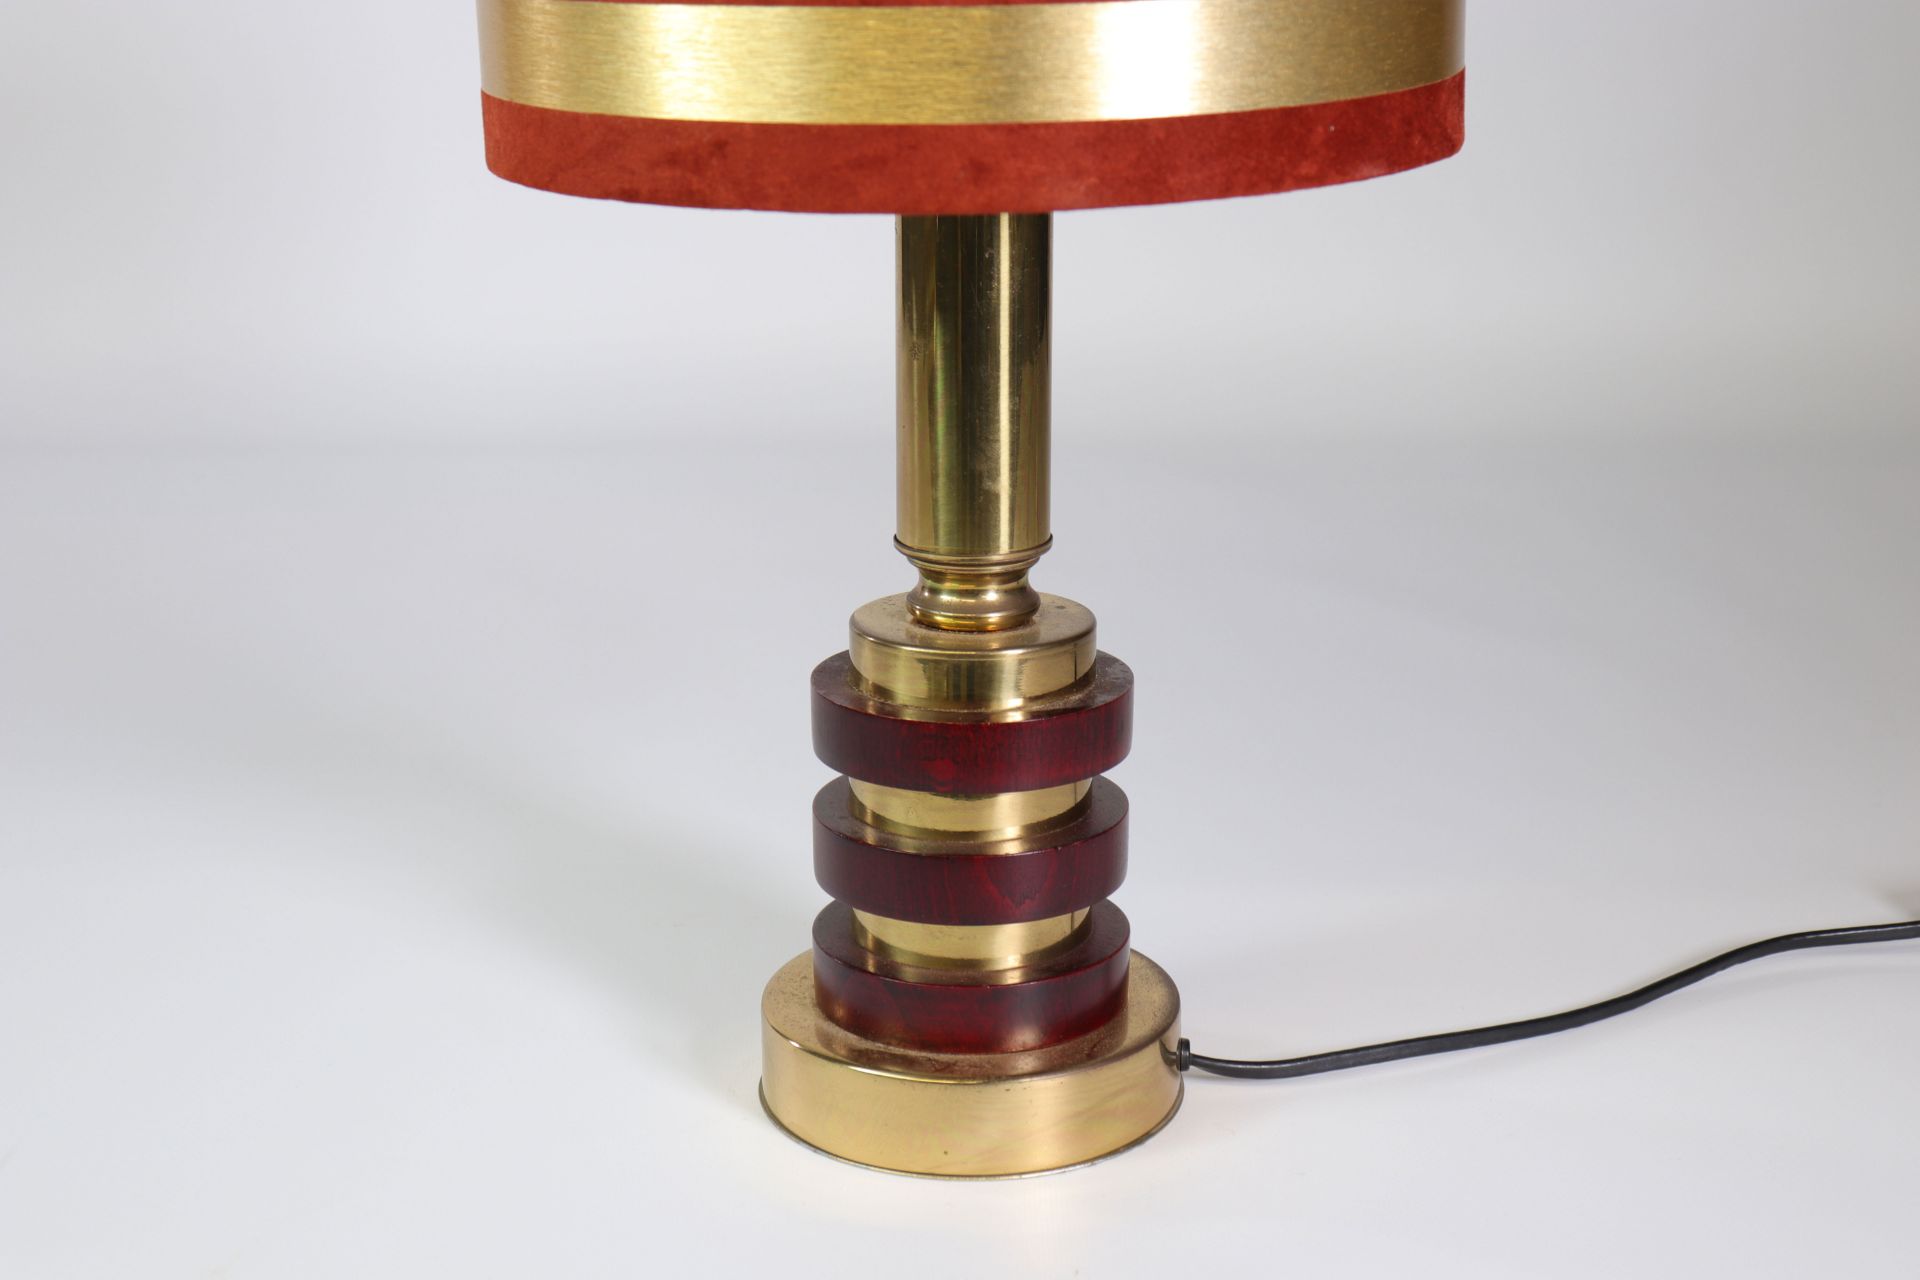 70's desk lamp - Image 2 of 2